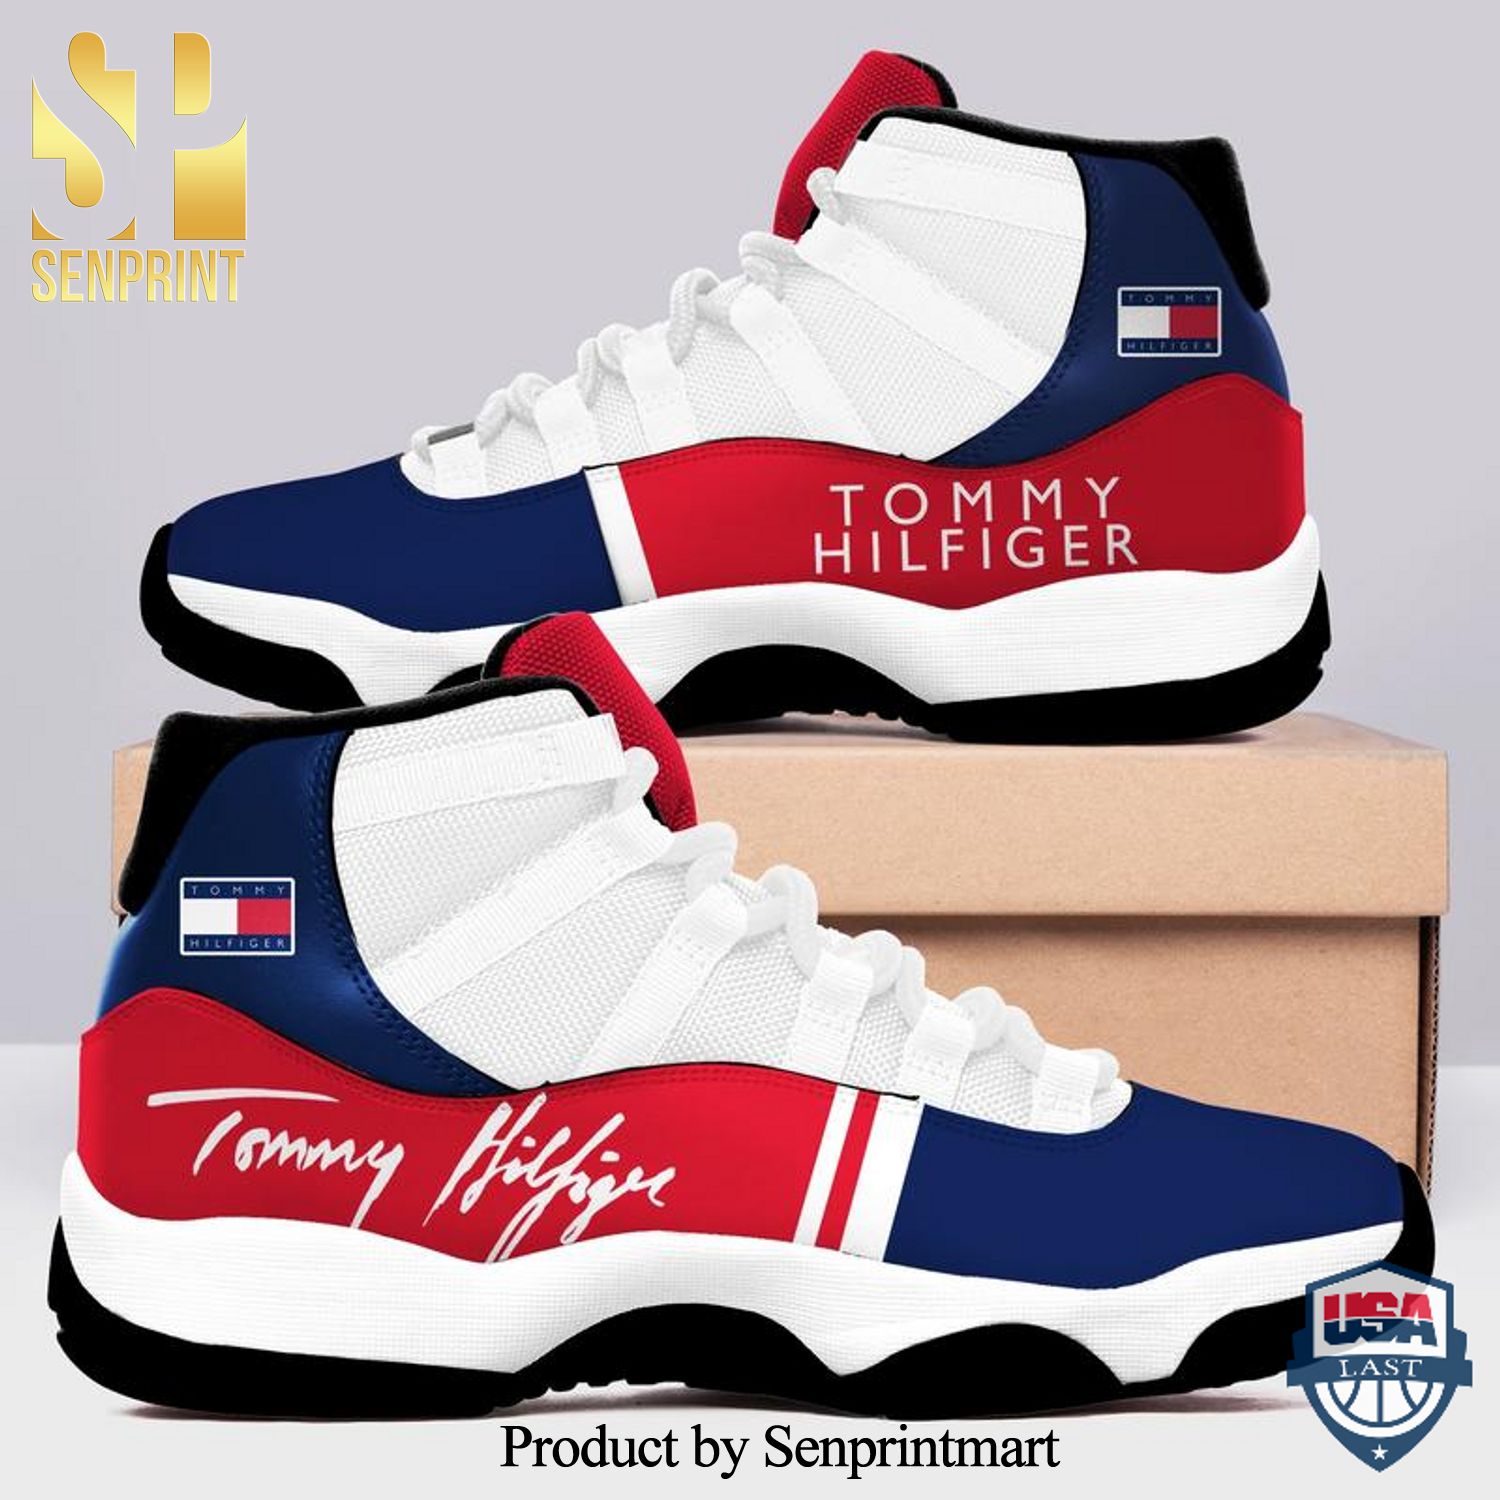 Tommy hilfiger sneaker Hot Version All Over Printed Air Jordan 11